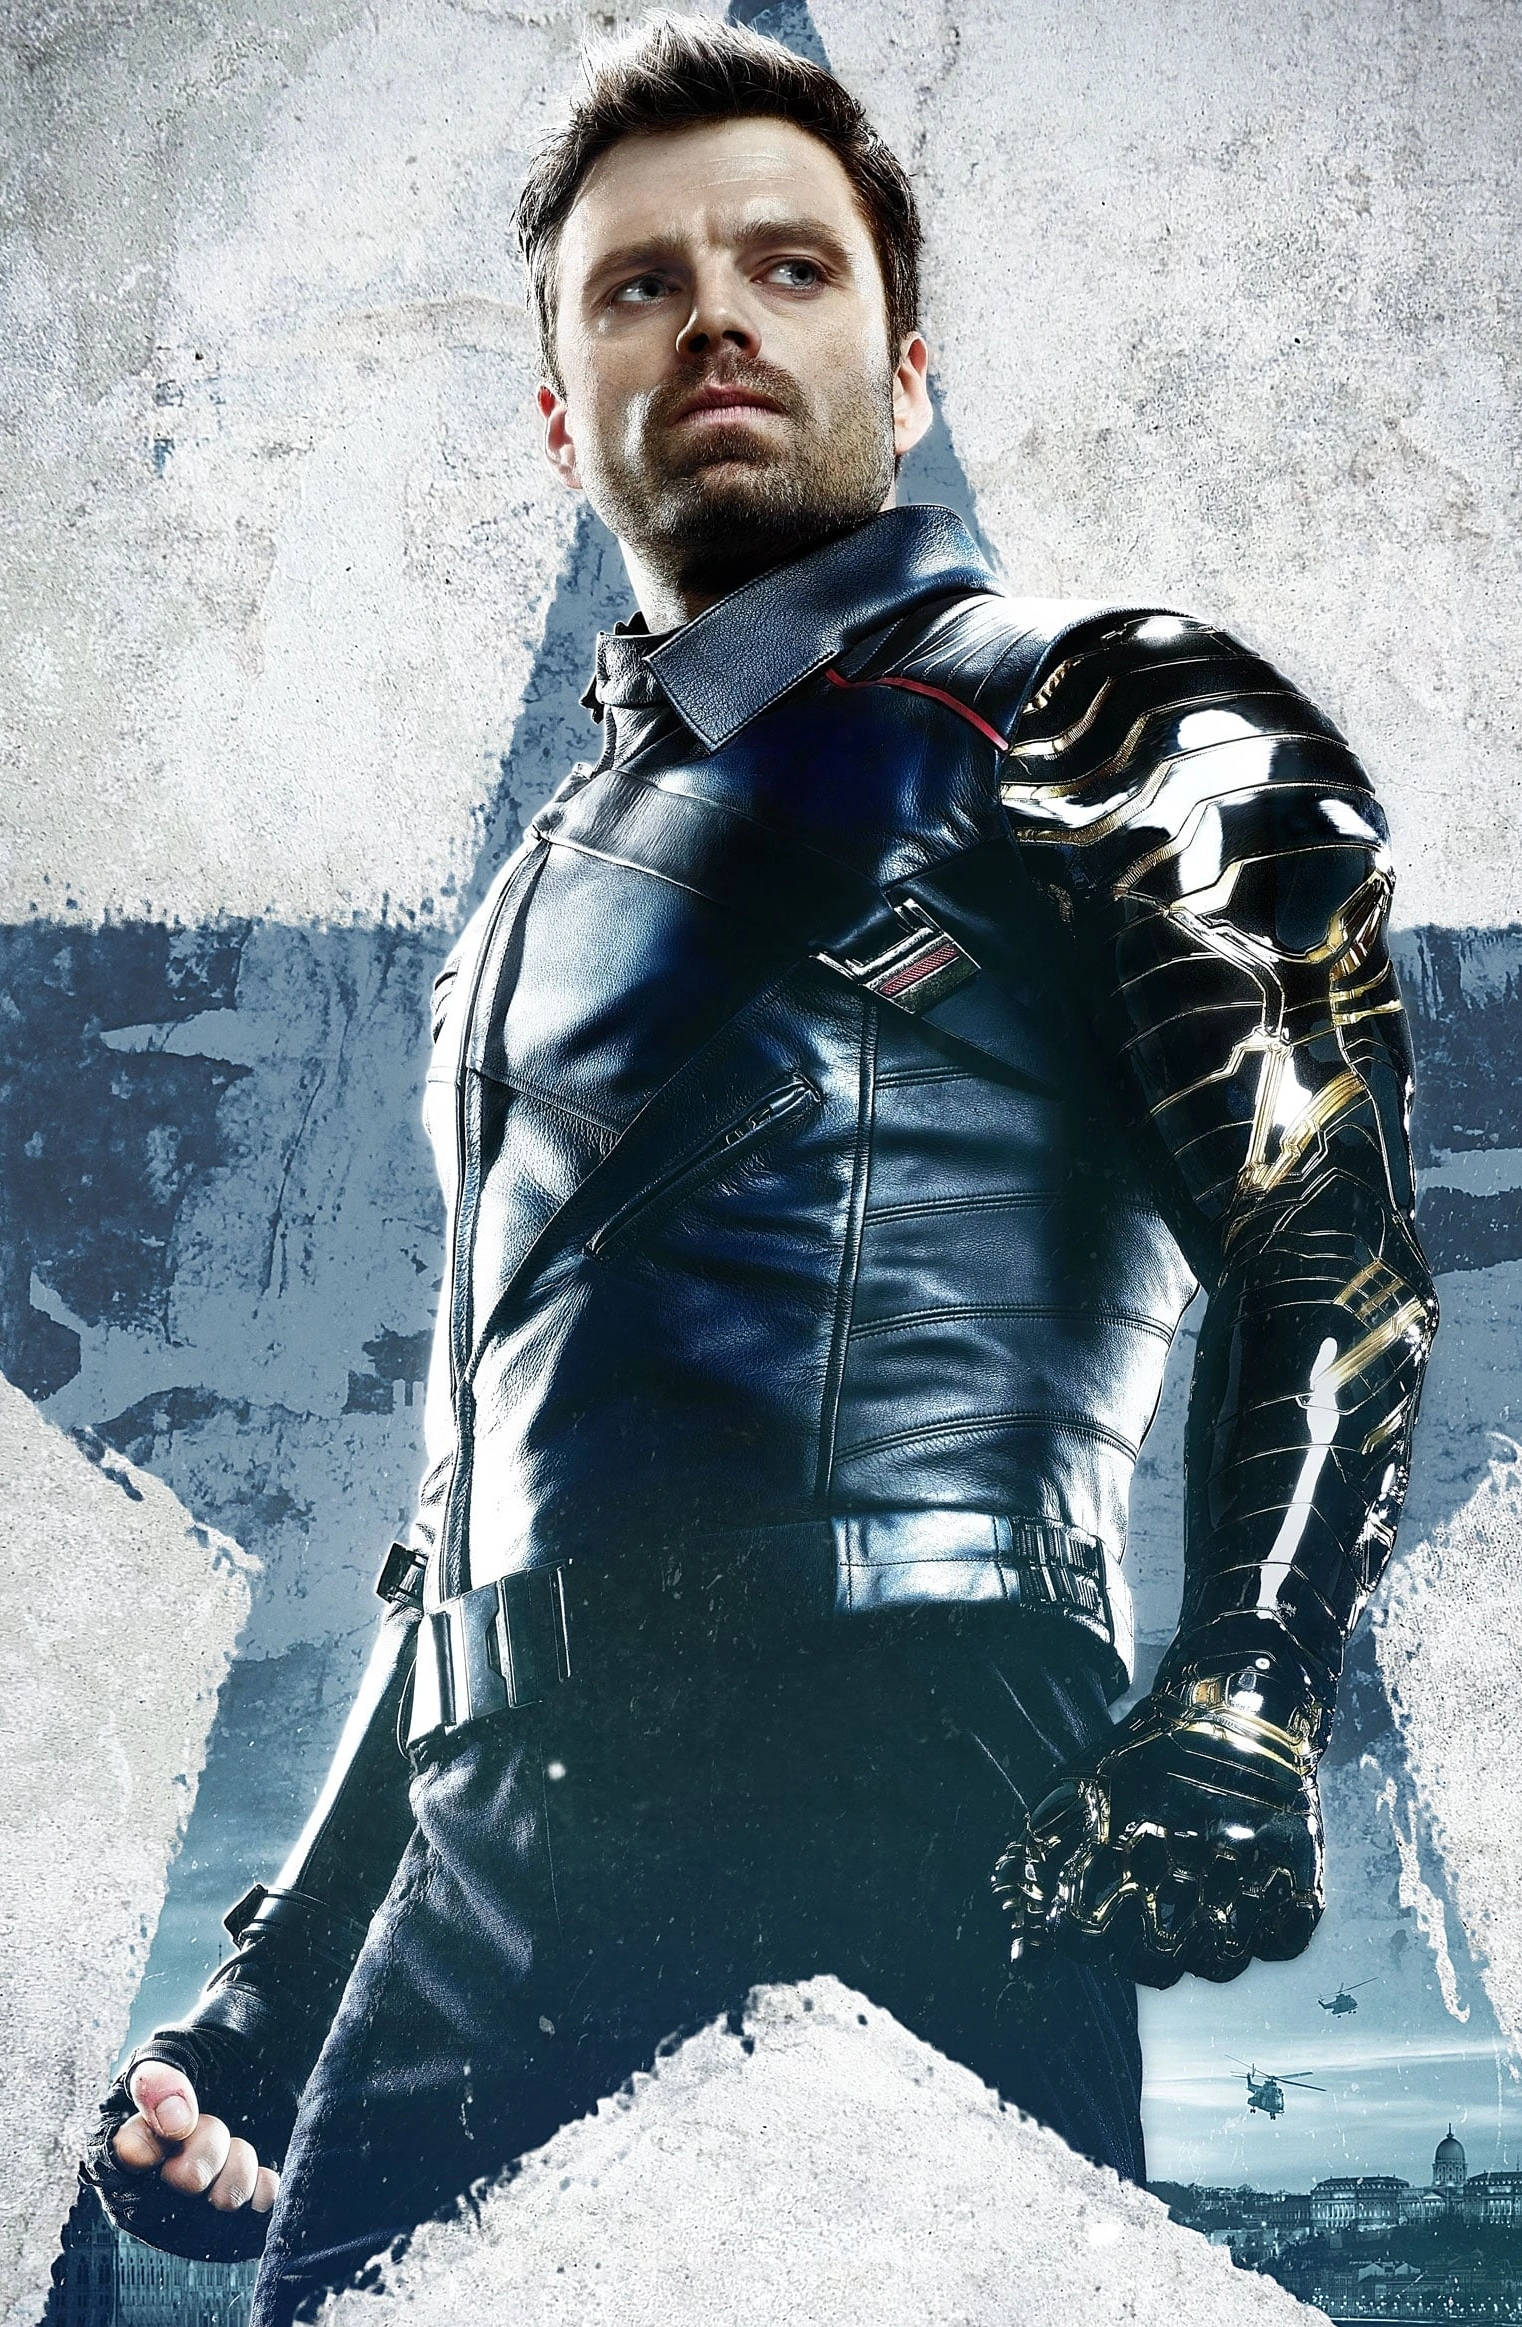 Winter Soldier | Marvel Cinematic Universe Wiki | Fandom